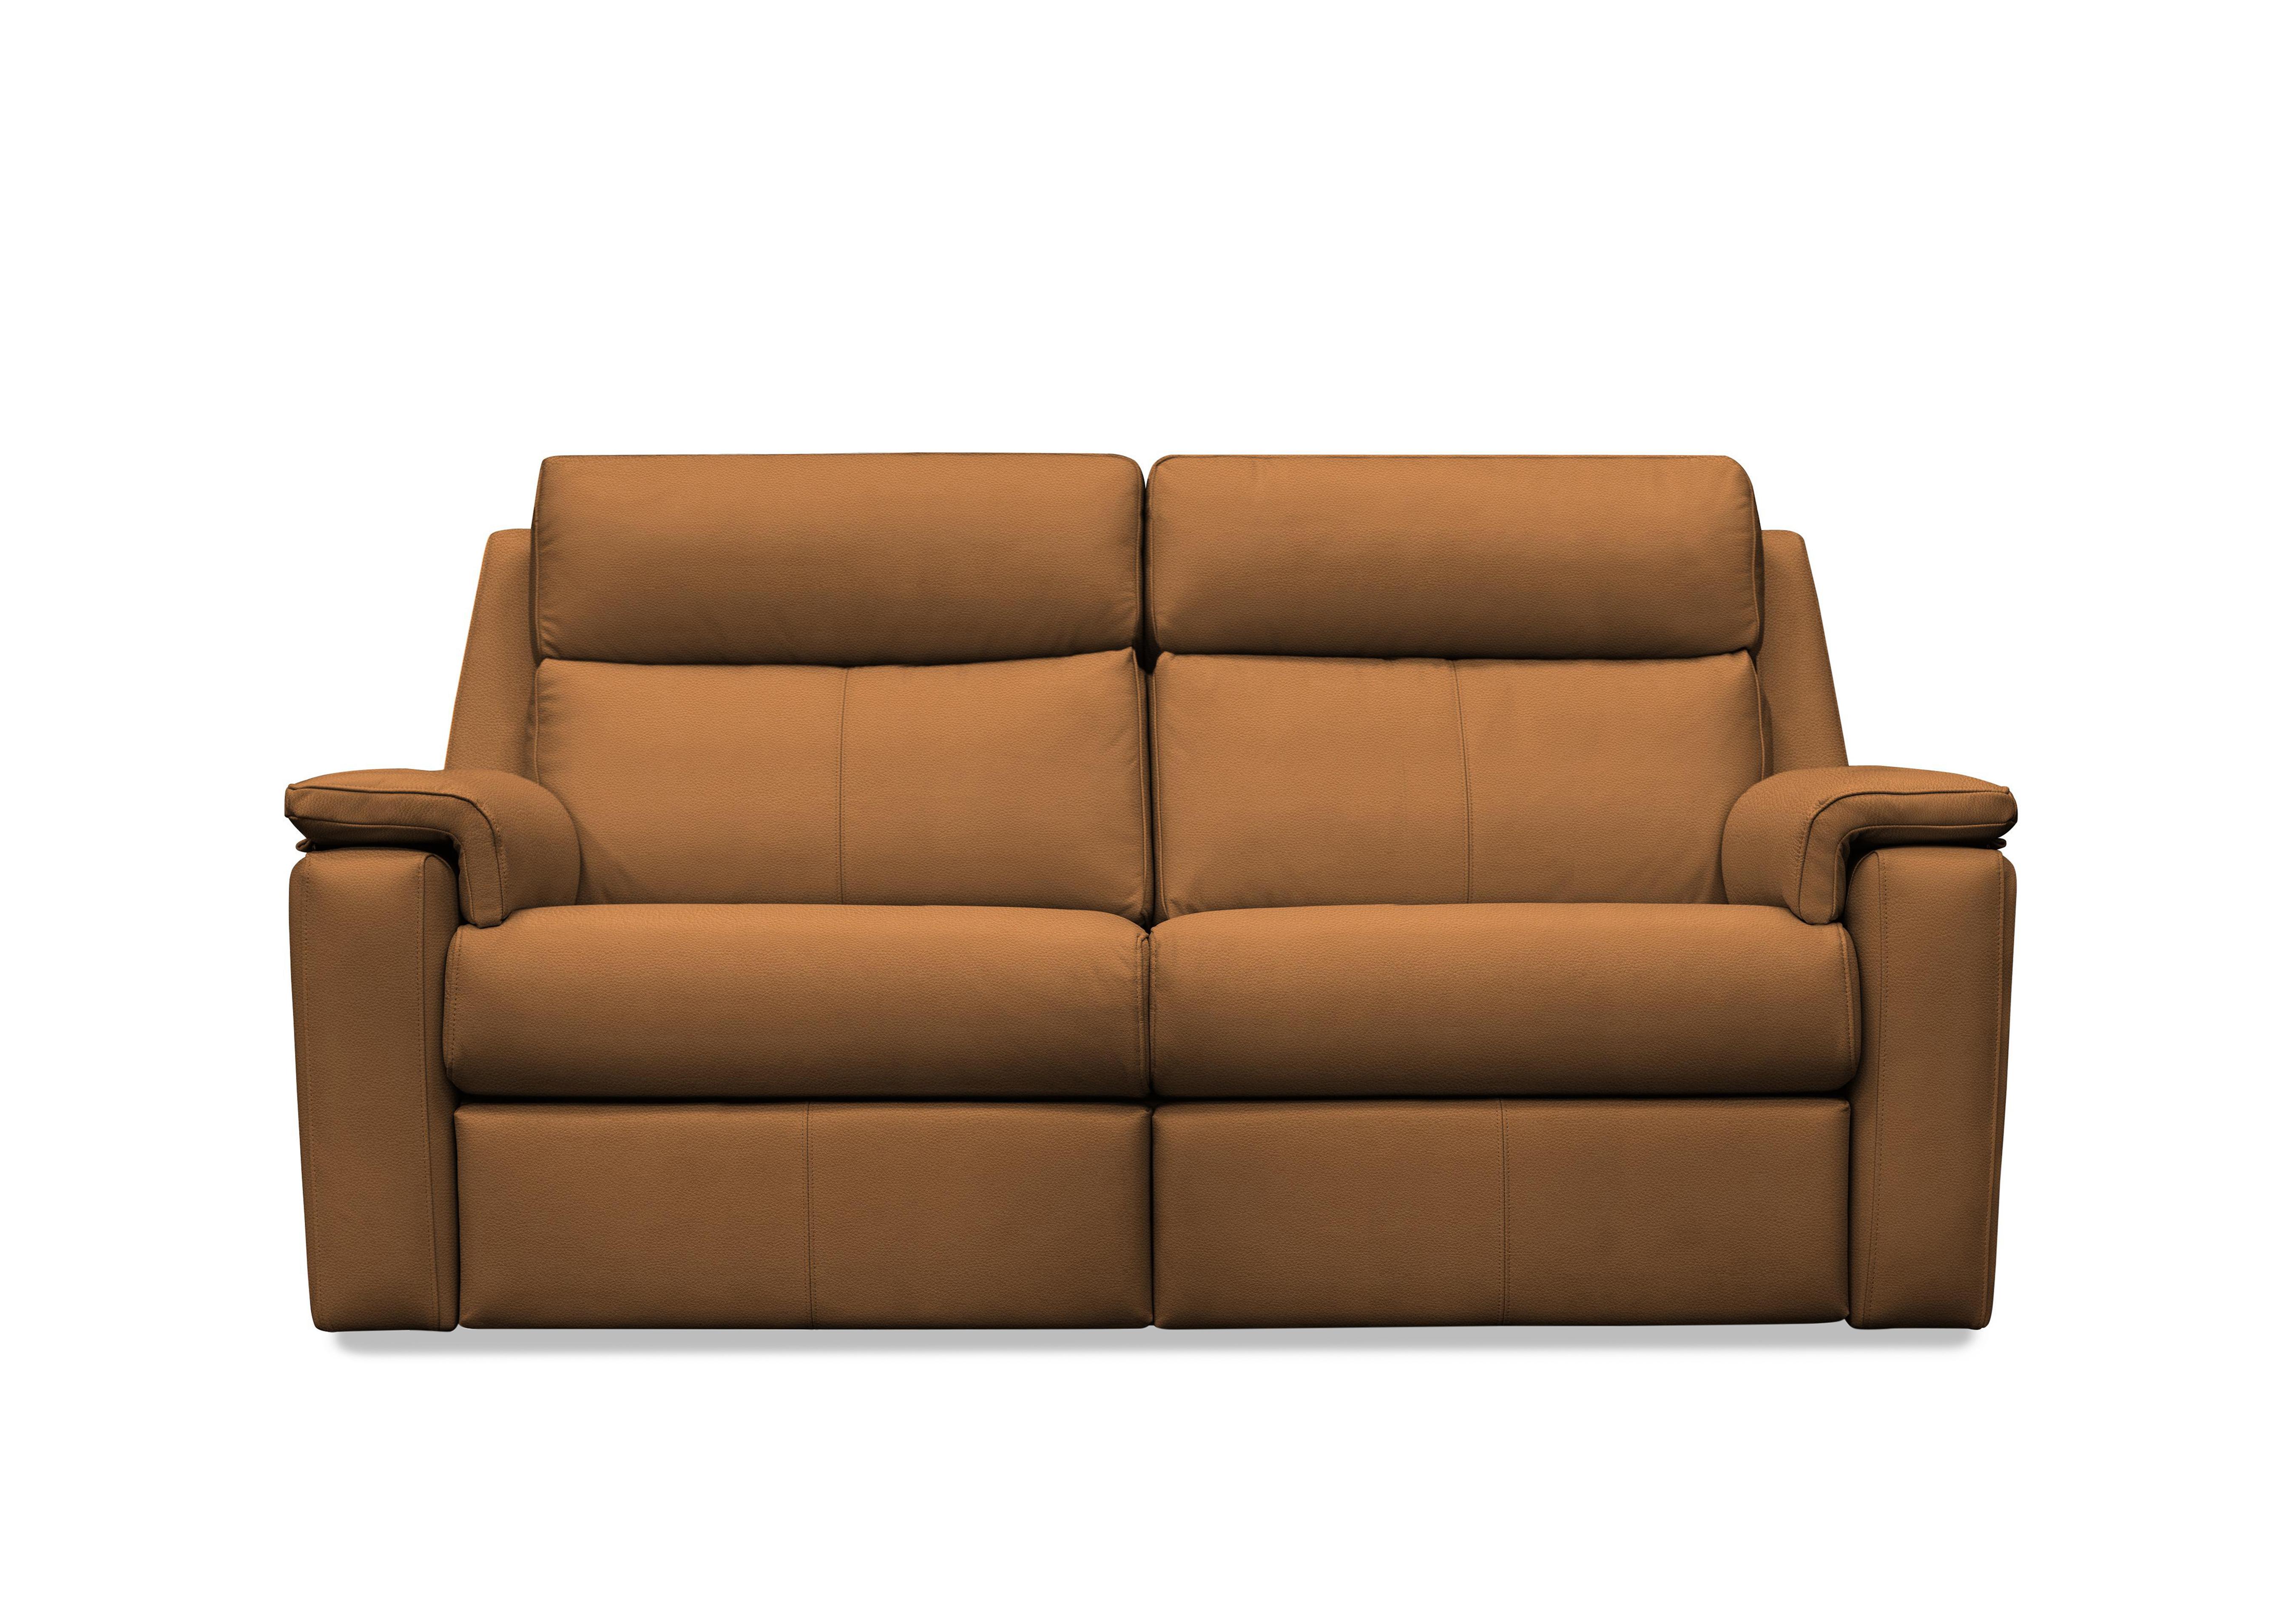 Thornbury 3 Seater Leather Sofa in L847 Cambridge Tan on Furniture Village